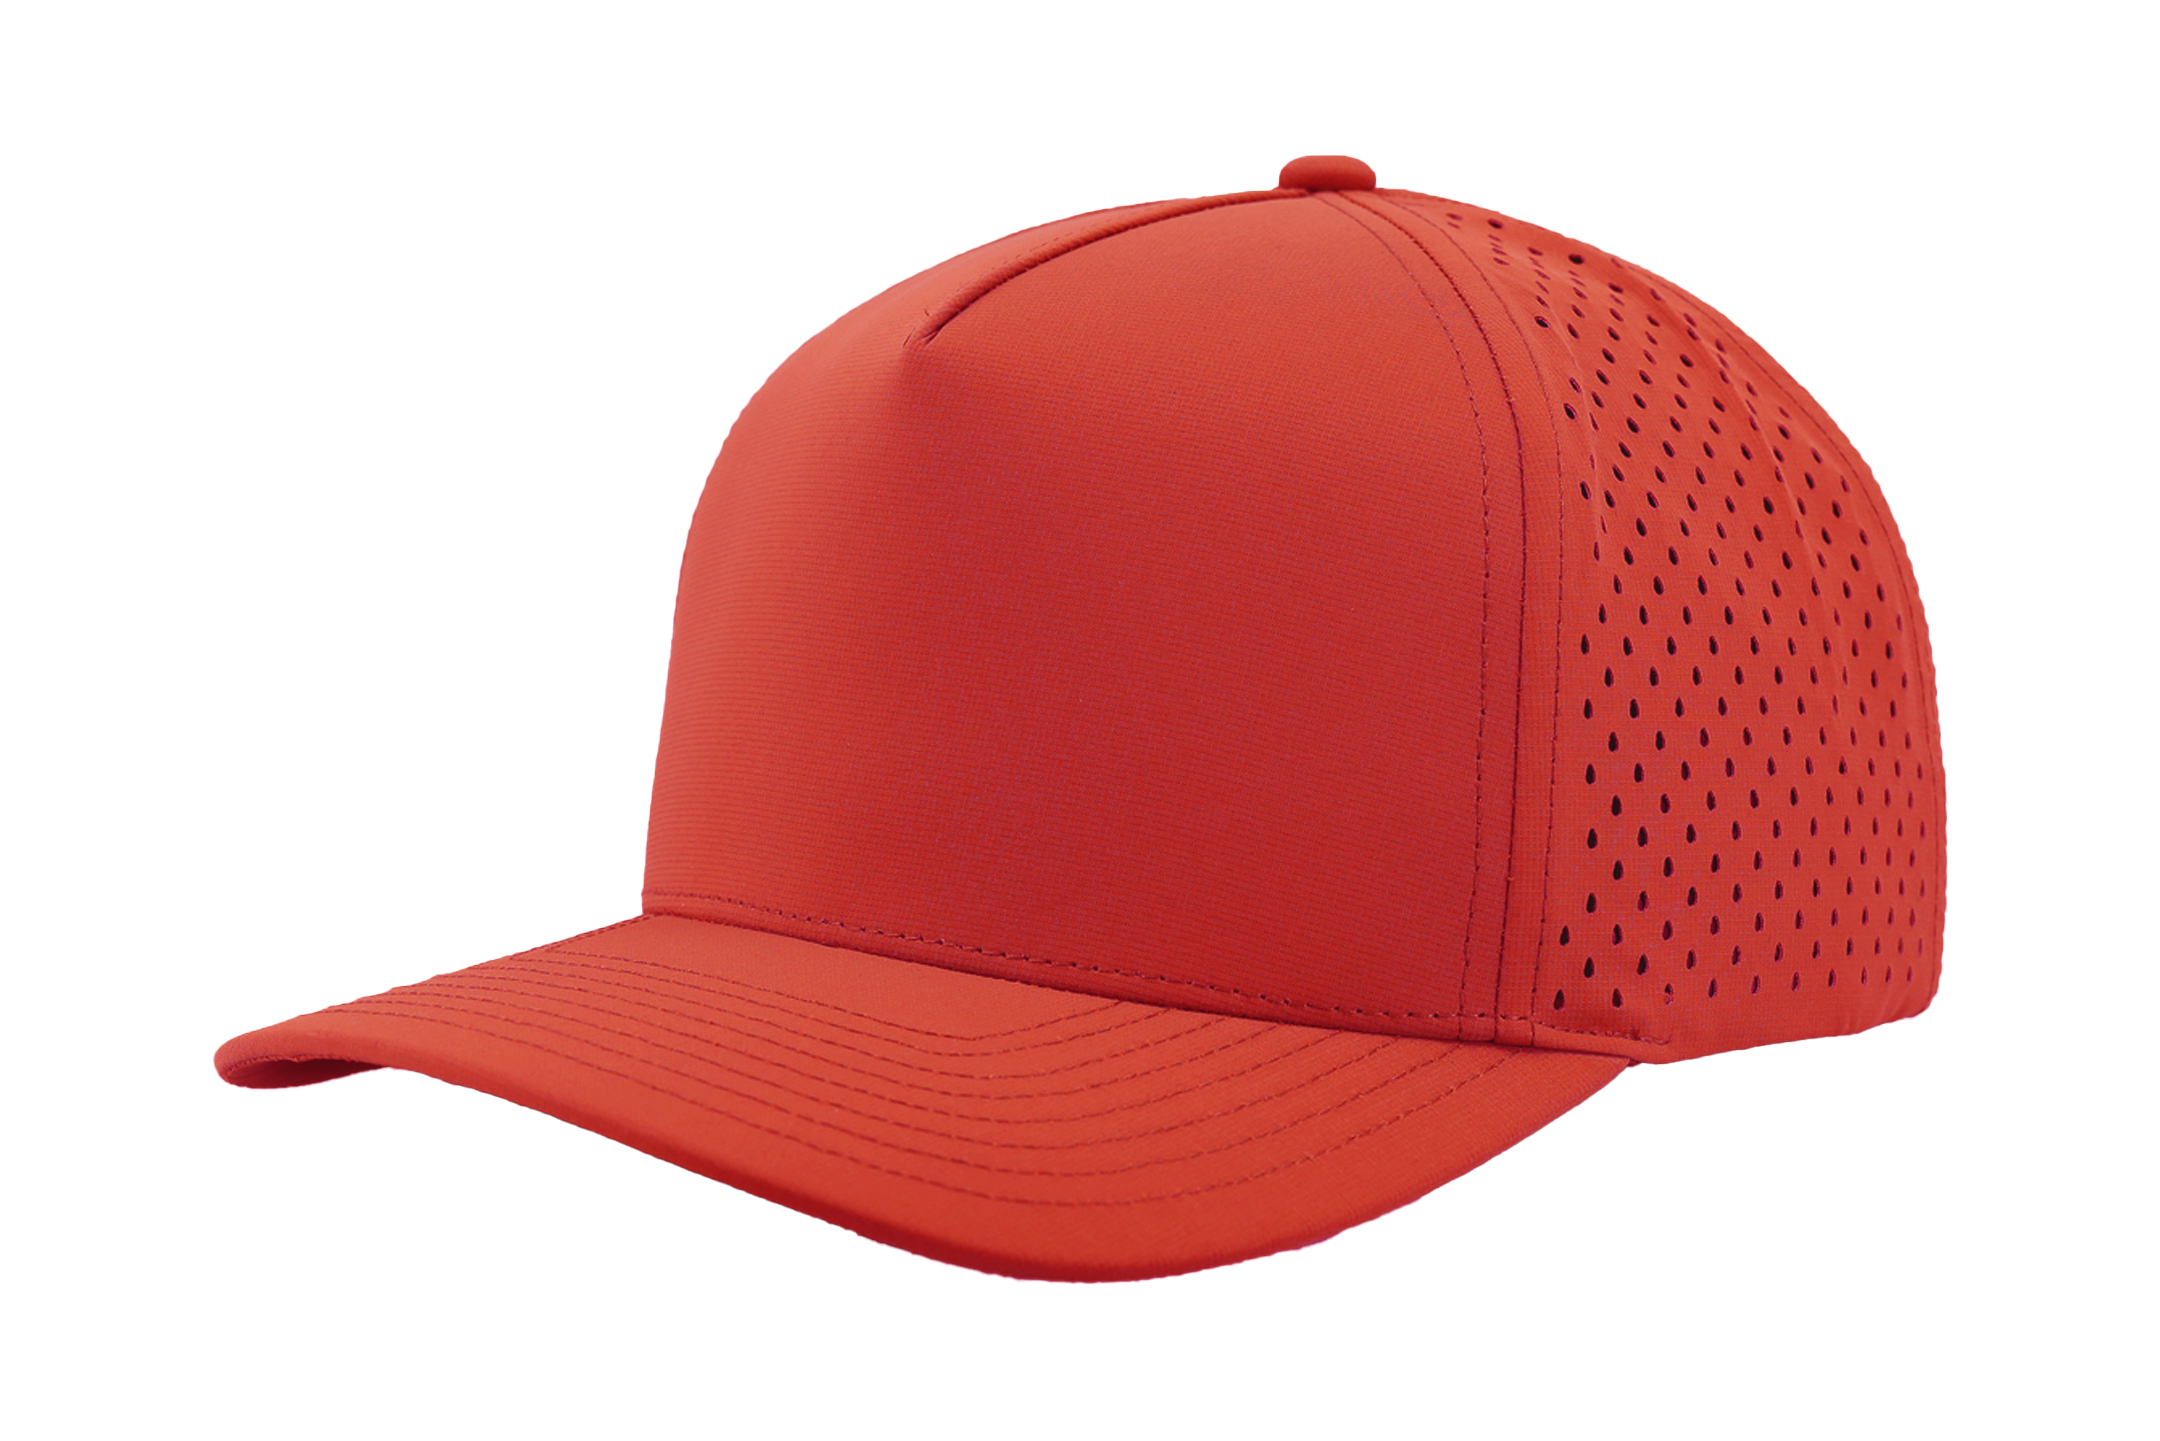 Custom Hat cardinal red front side view blackhawk snapback hat